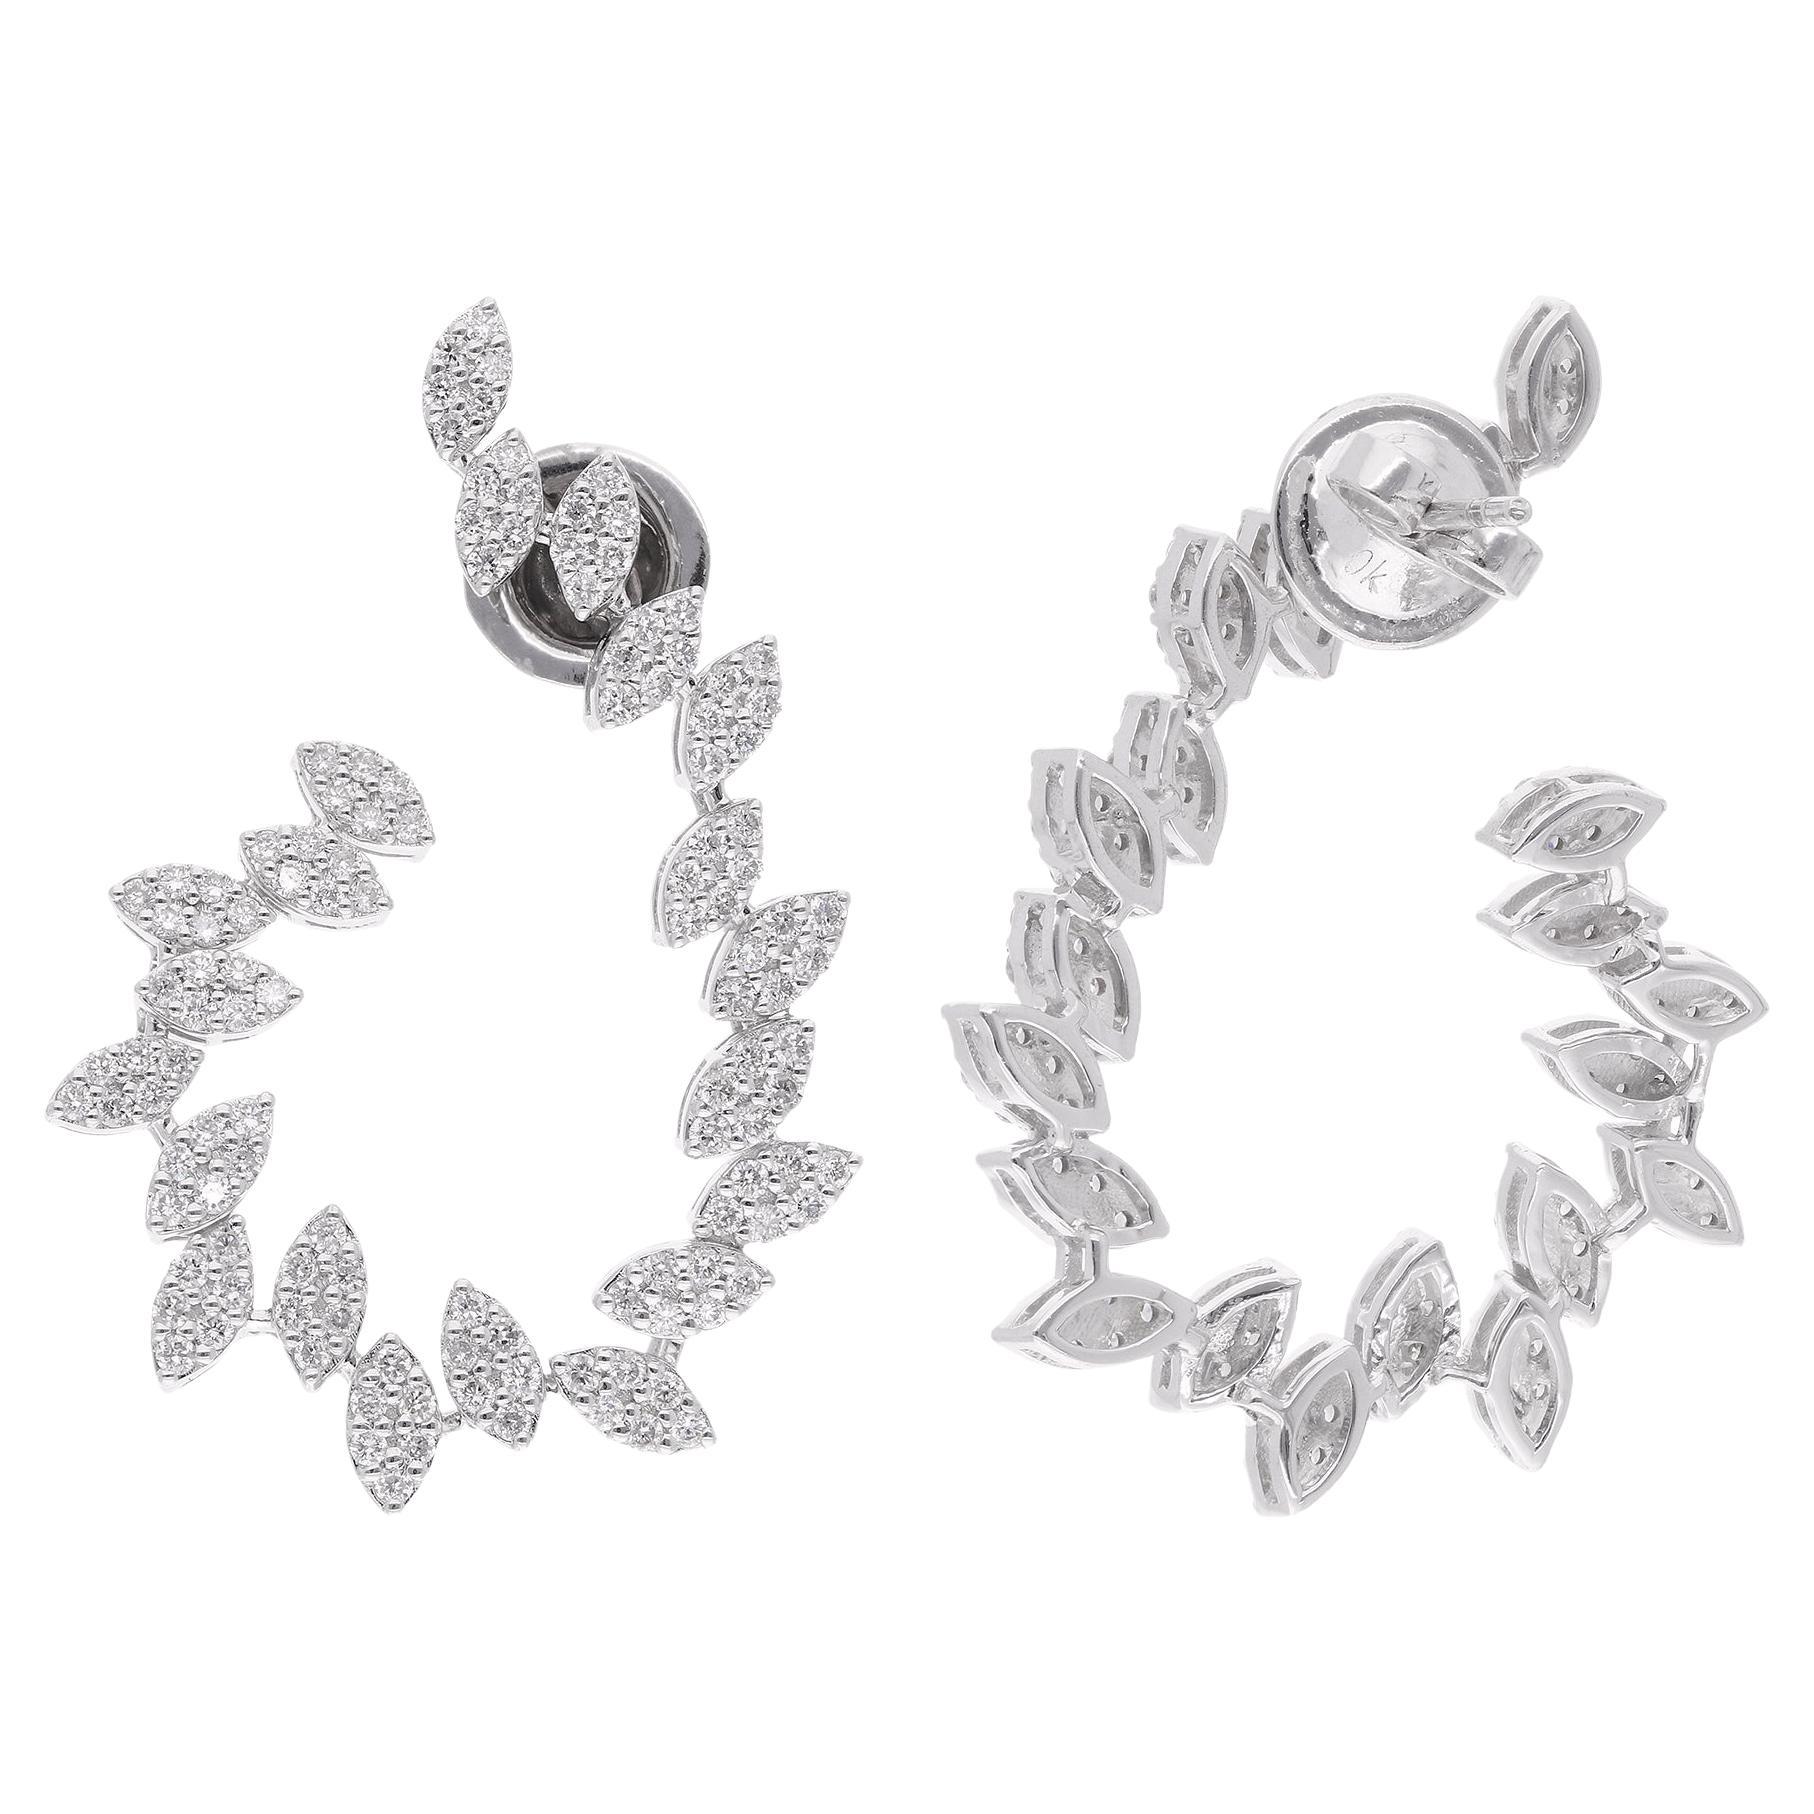 1.49 Carat Diamond Dangle Earrings 10 Karat White Gold Handmade Fine Jewelry (Boucles d'oreilles pendantes en diamant de 1,49 carat)